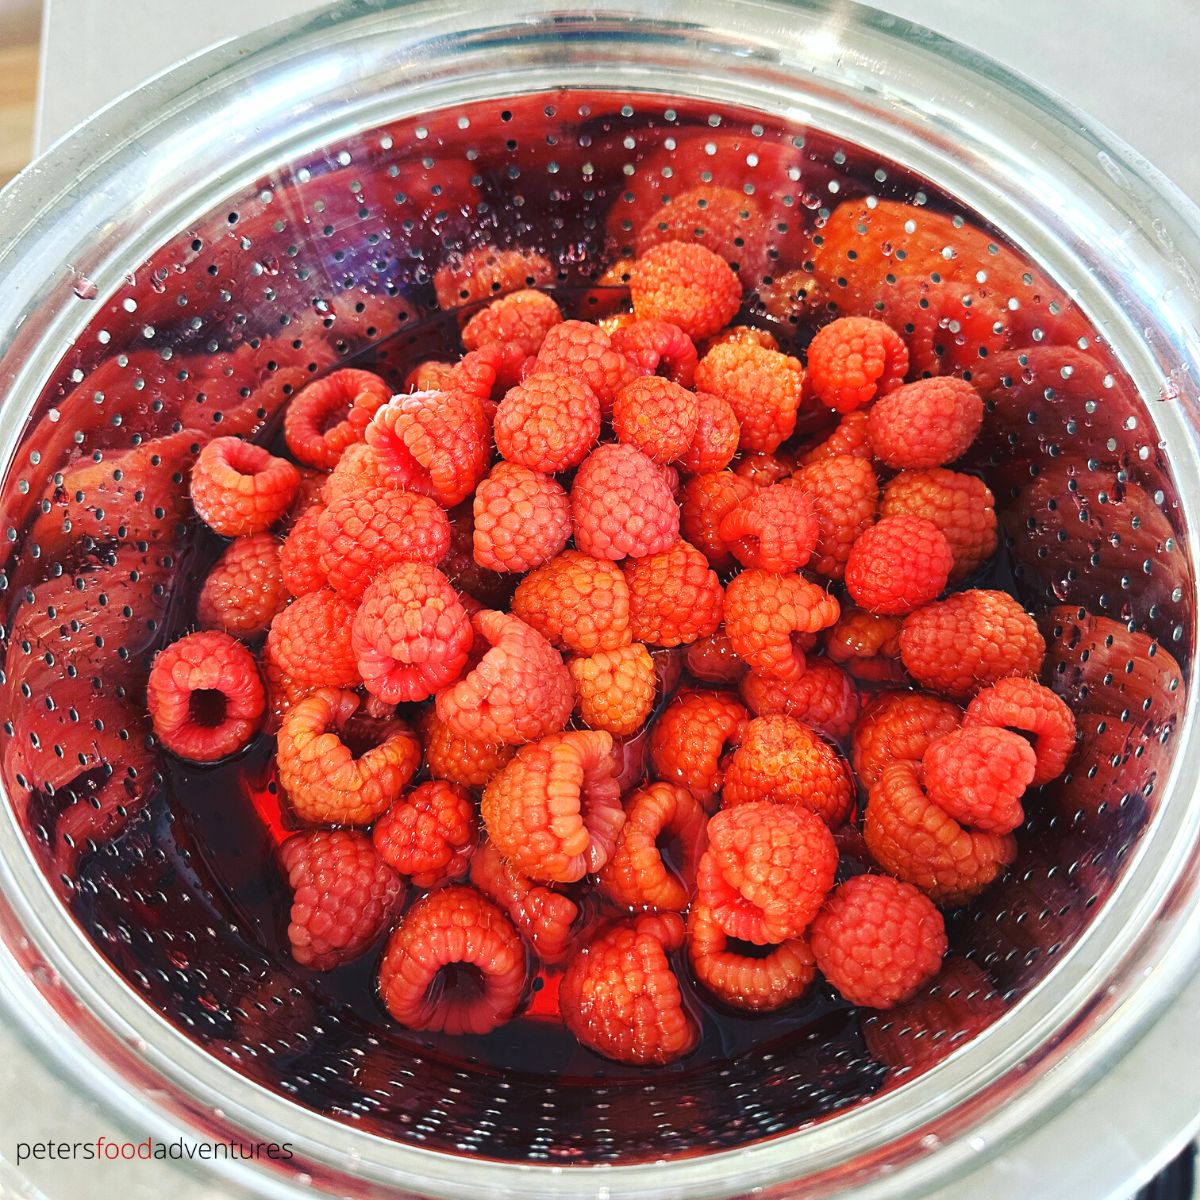 washing raspberries in strainer